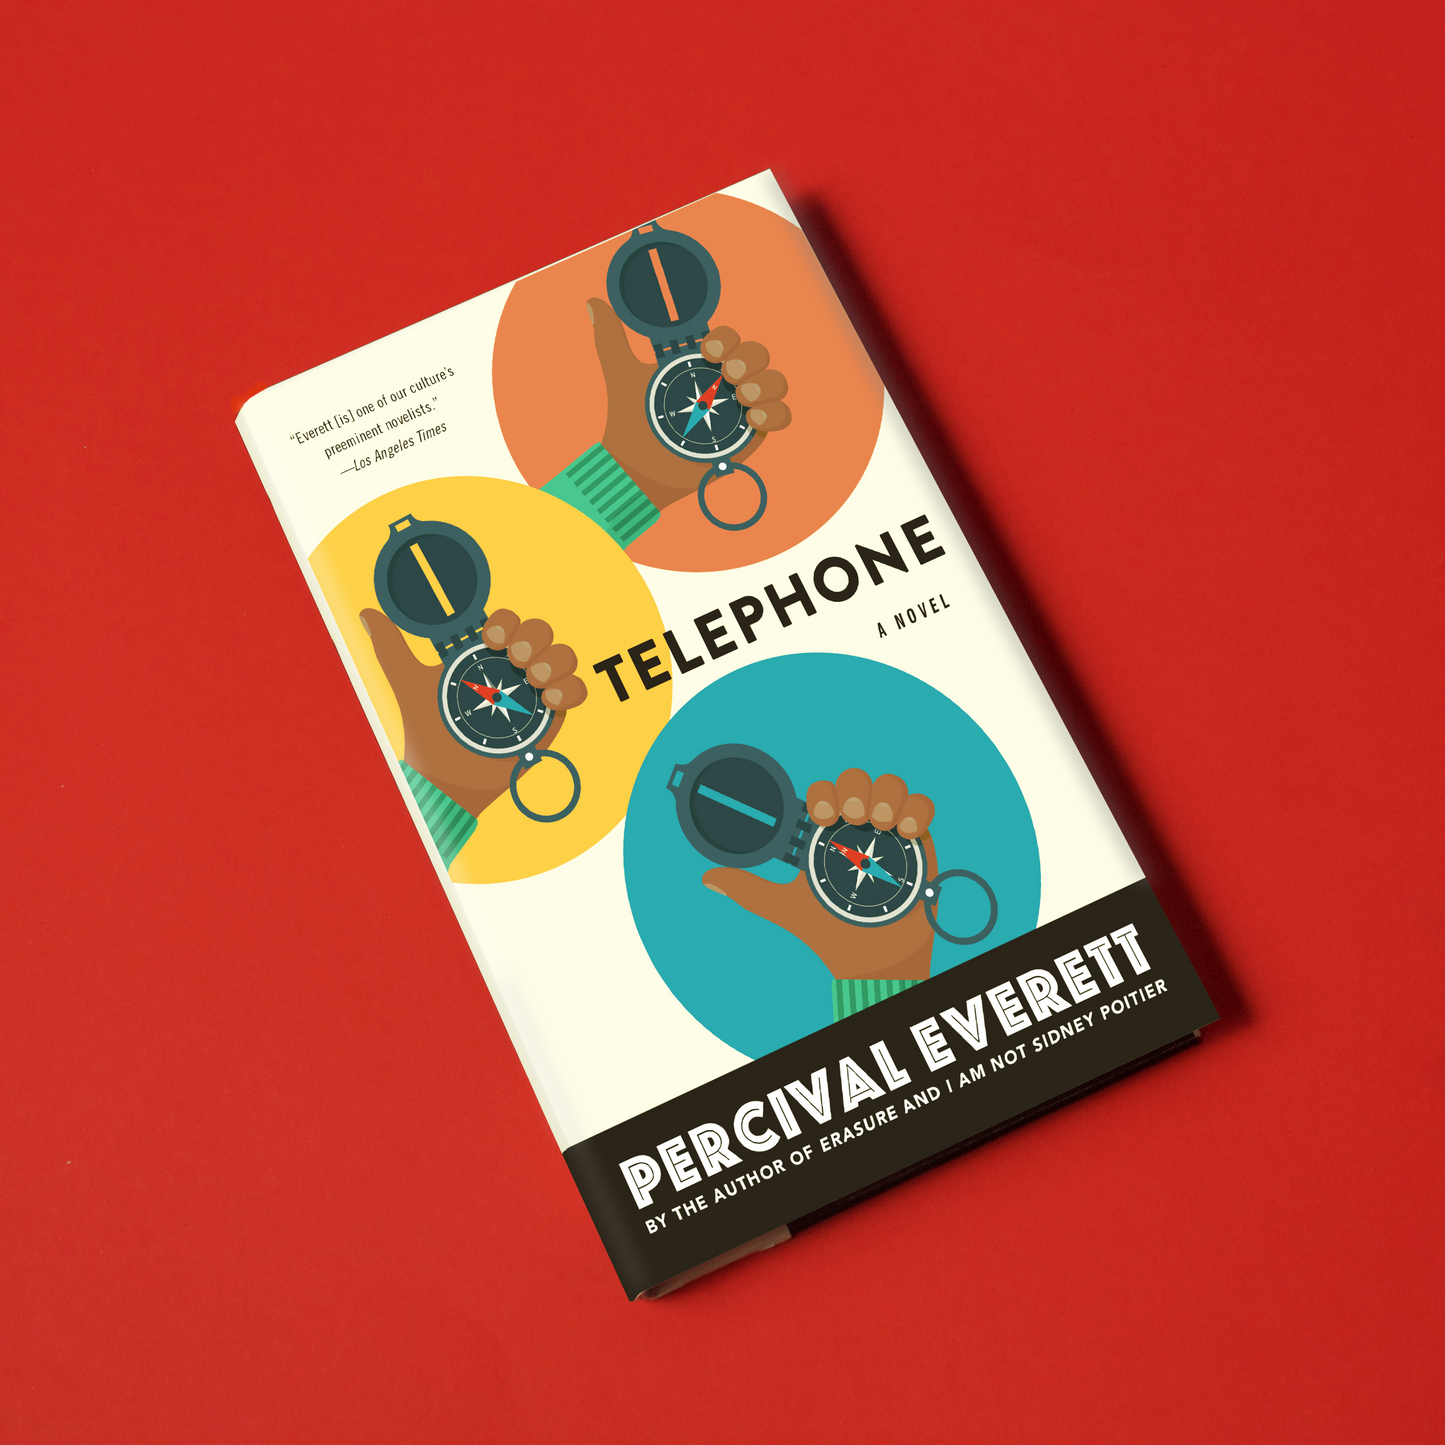 Telephone, by Percival Everett